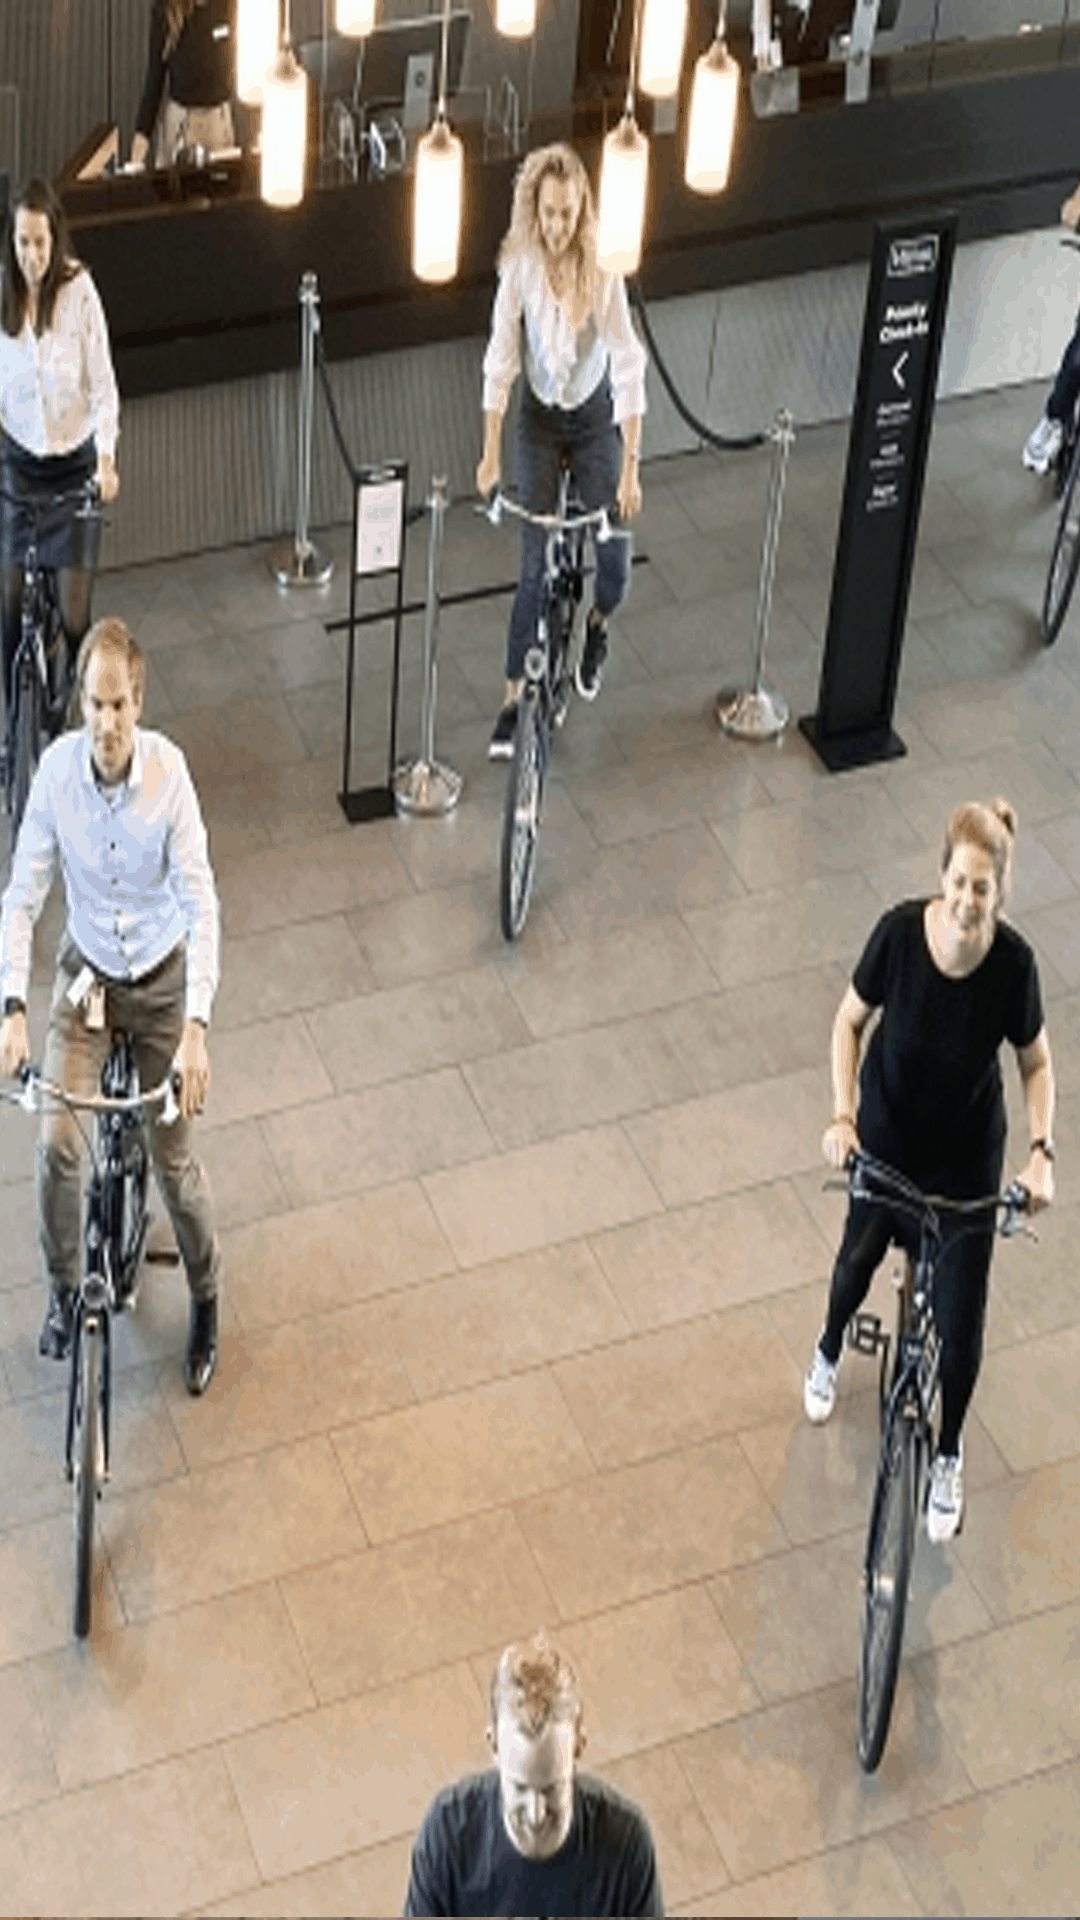 FI_hospitality management - doubletree hilton amsterdam wordt fietspad _blog